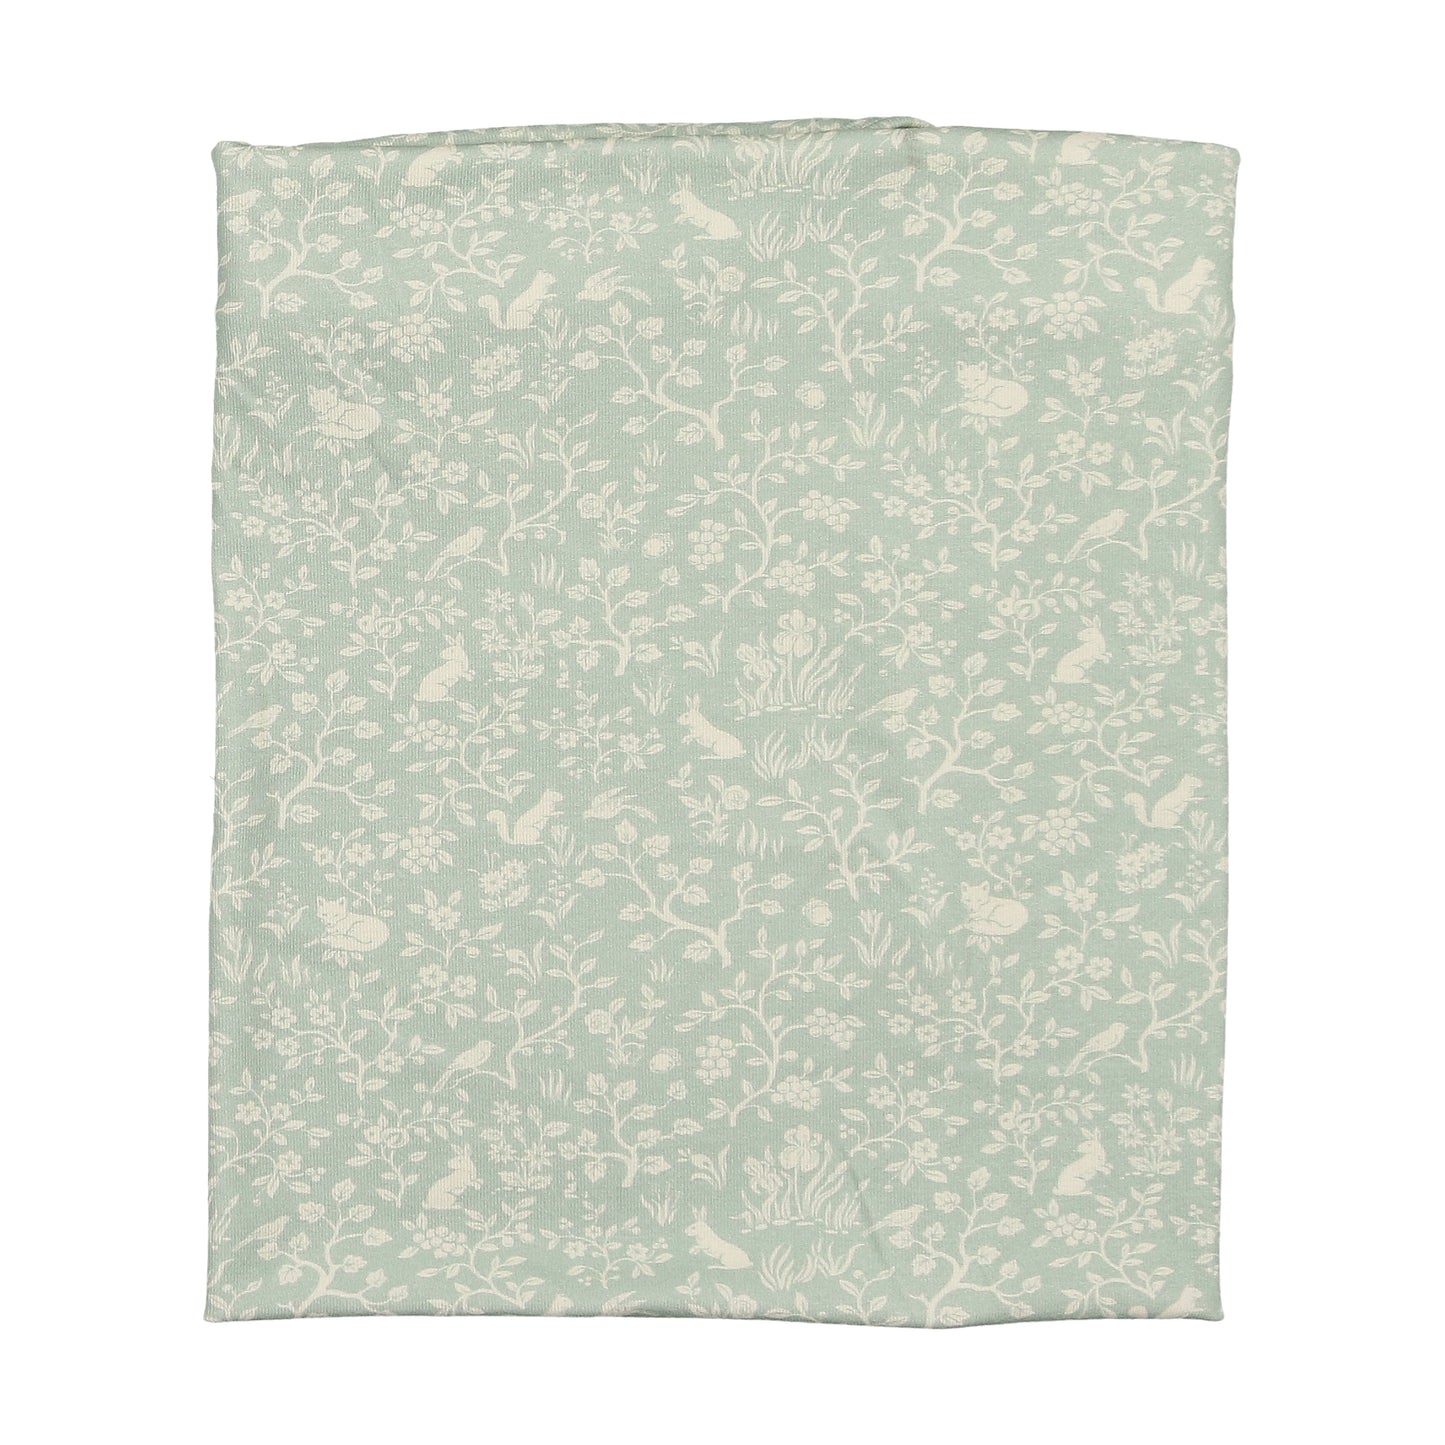 Mint Garden Blanket